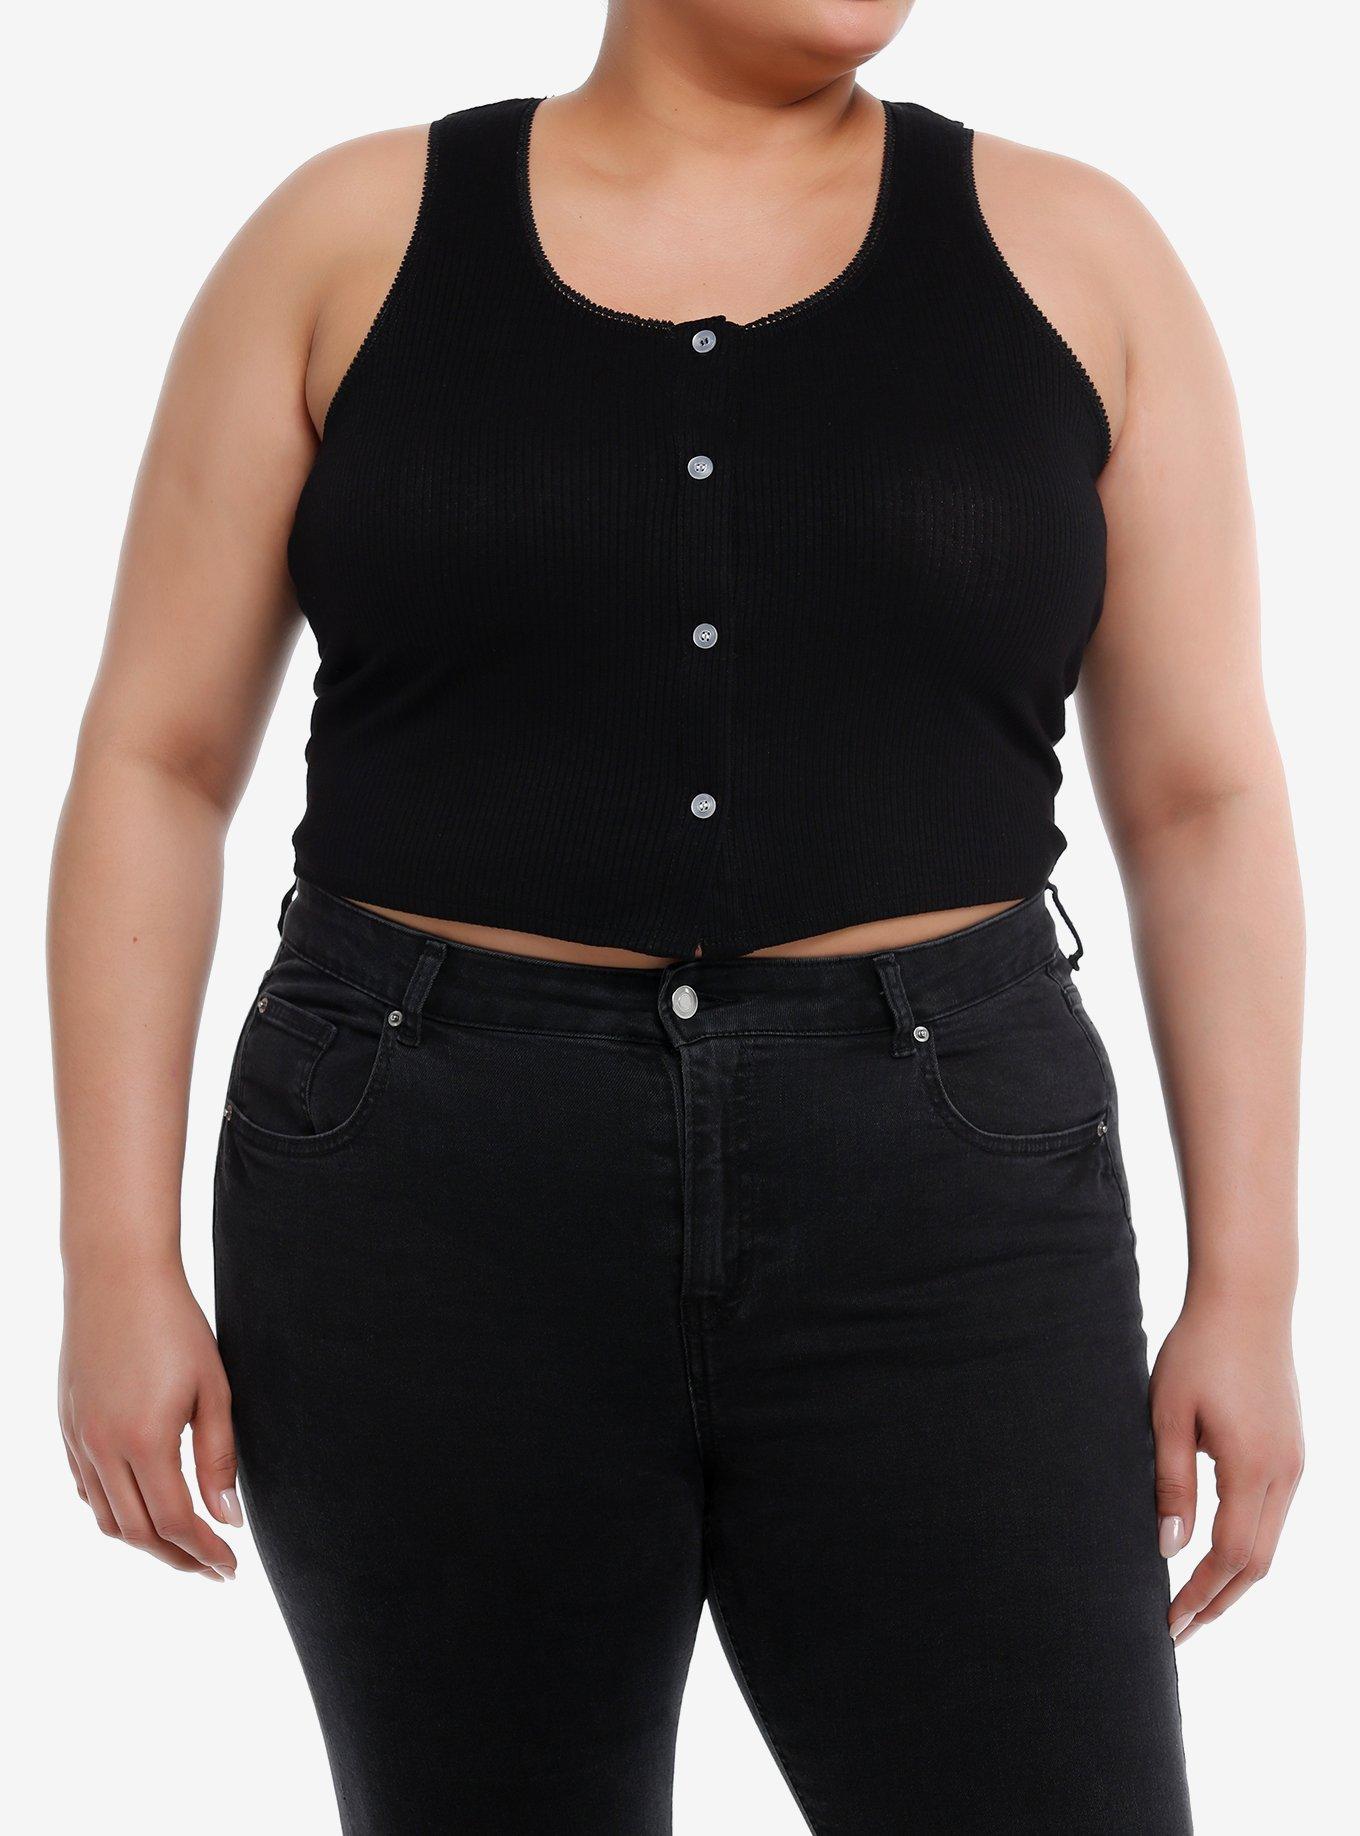 Express Black Lace Crop Tank Top Women's Size Large New - beyond